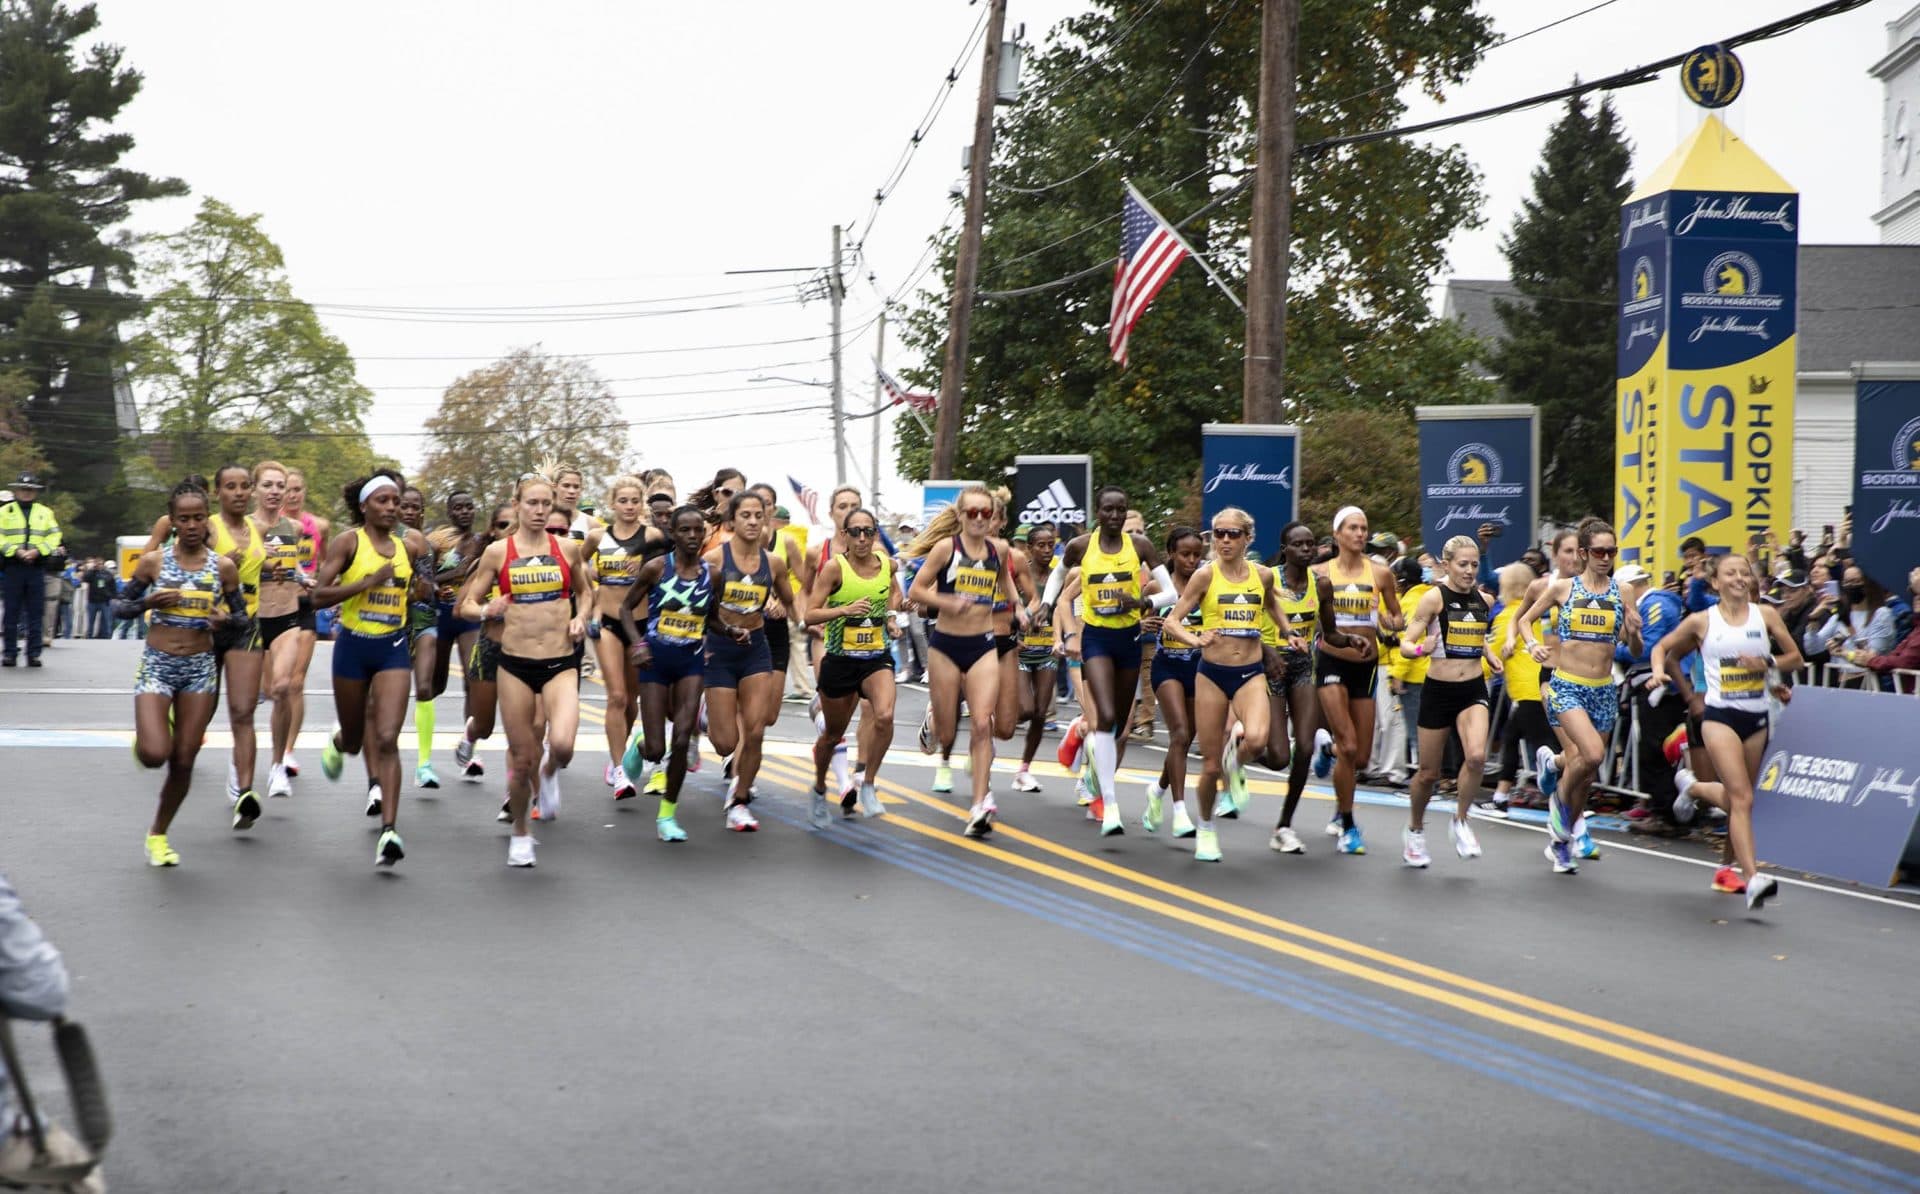 The professional women cross the start line in the 125th Boston Marathon. (Robin Lubbock/WBUR)